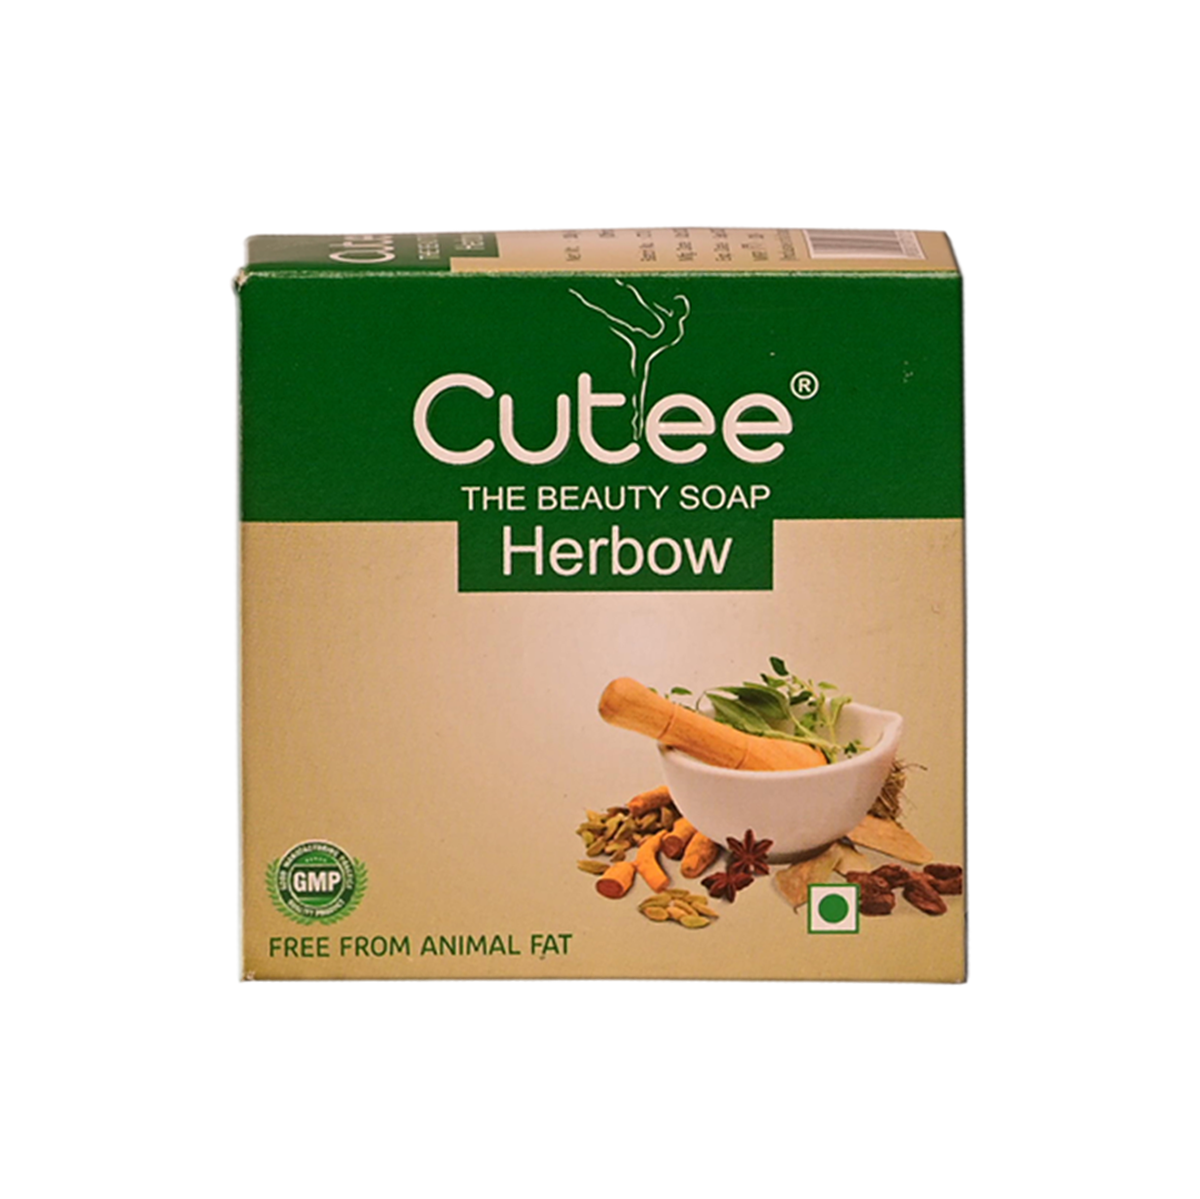 Cutee Herbow